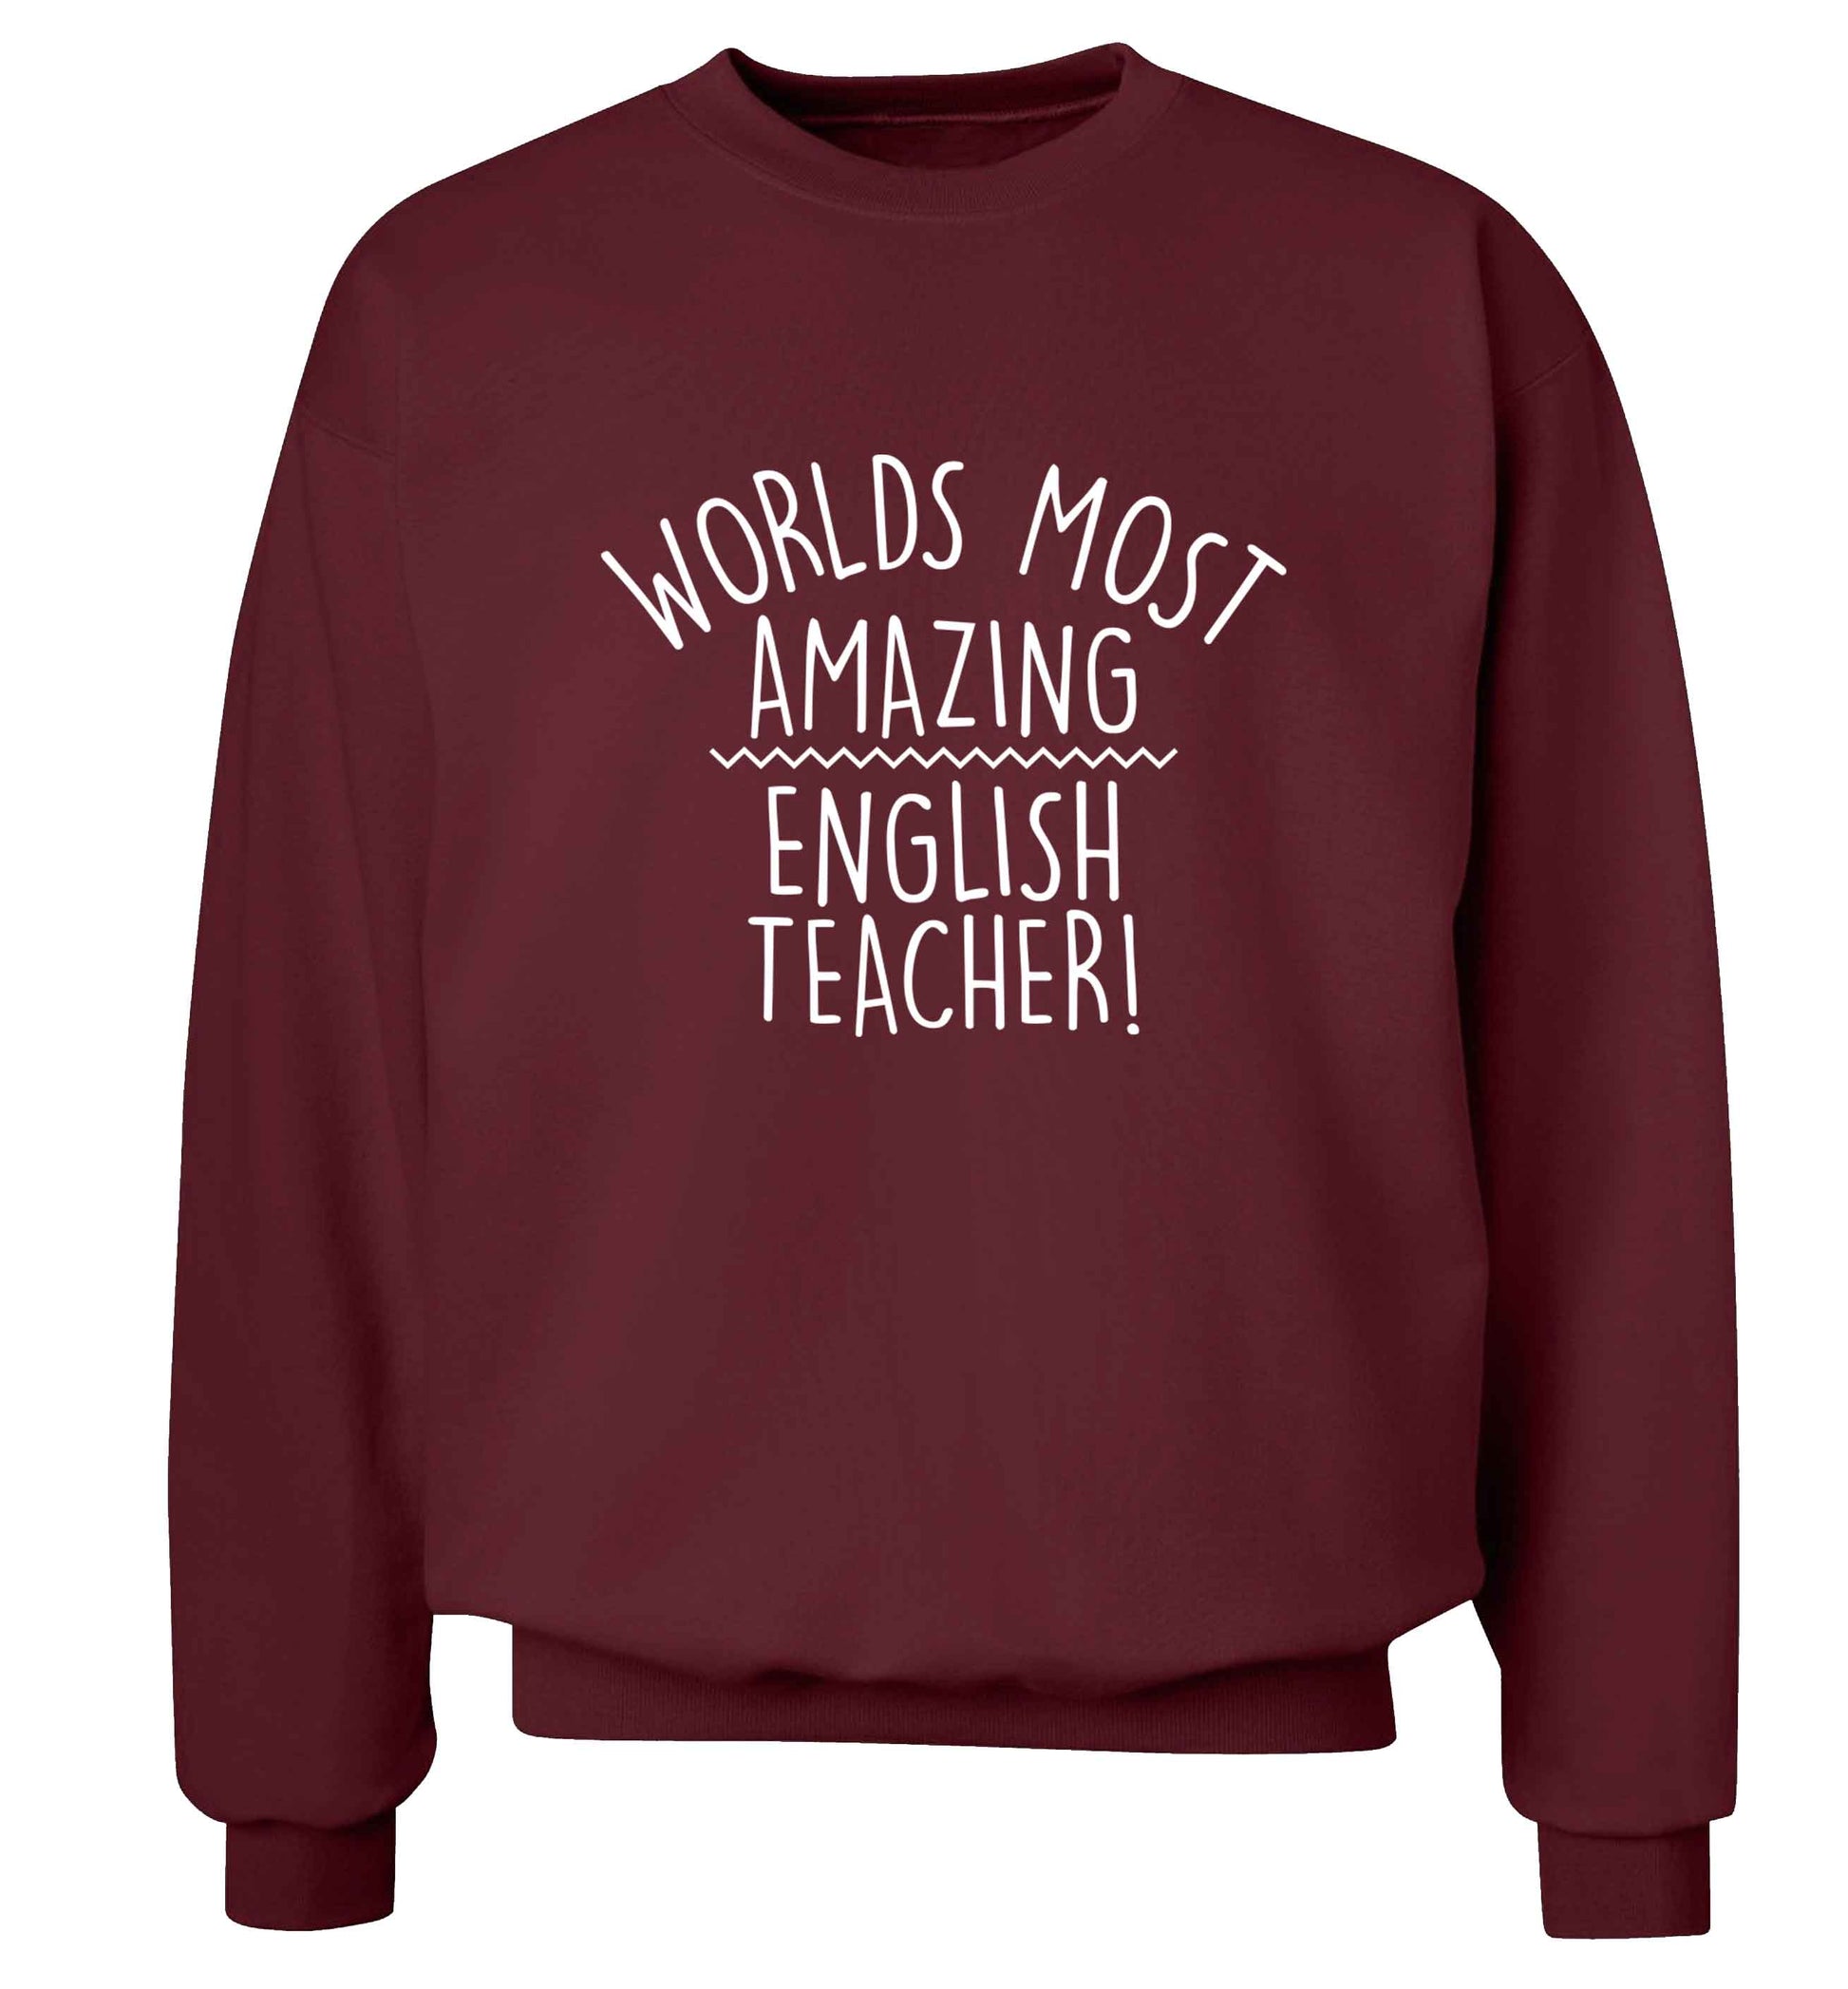 Worlds most amazing English teacher adult's unisex maroon sweater 2XL